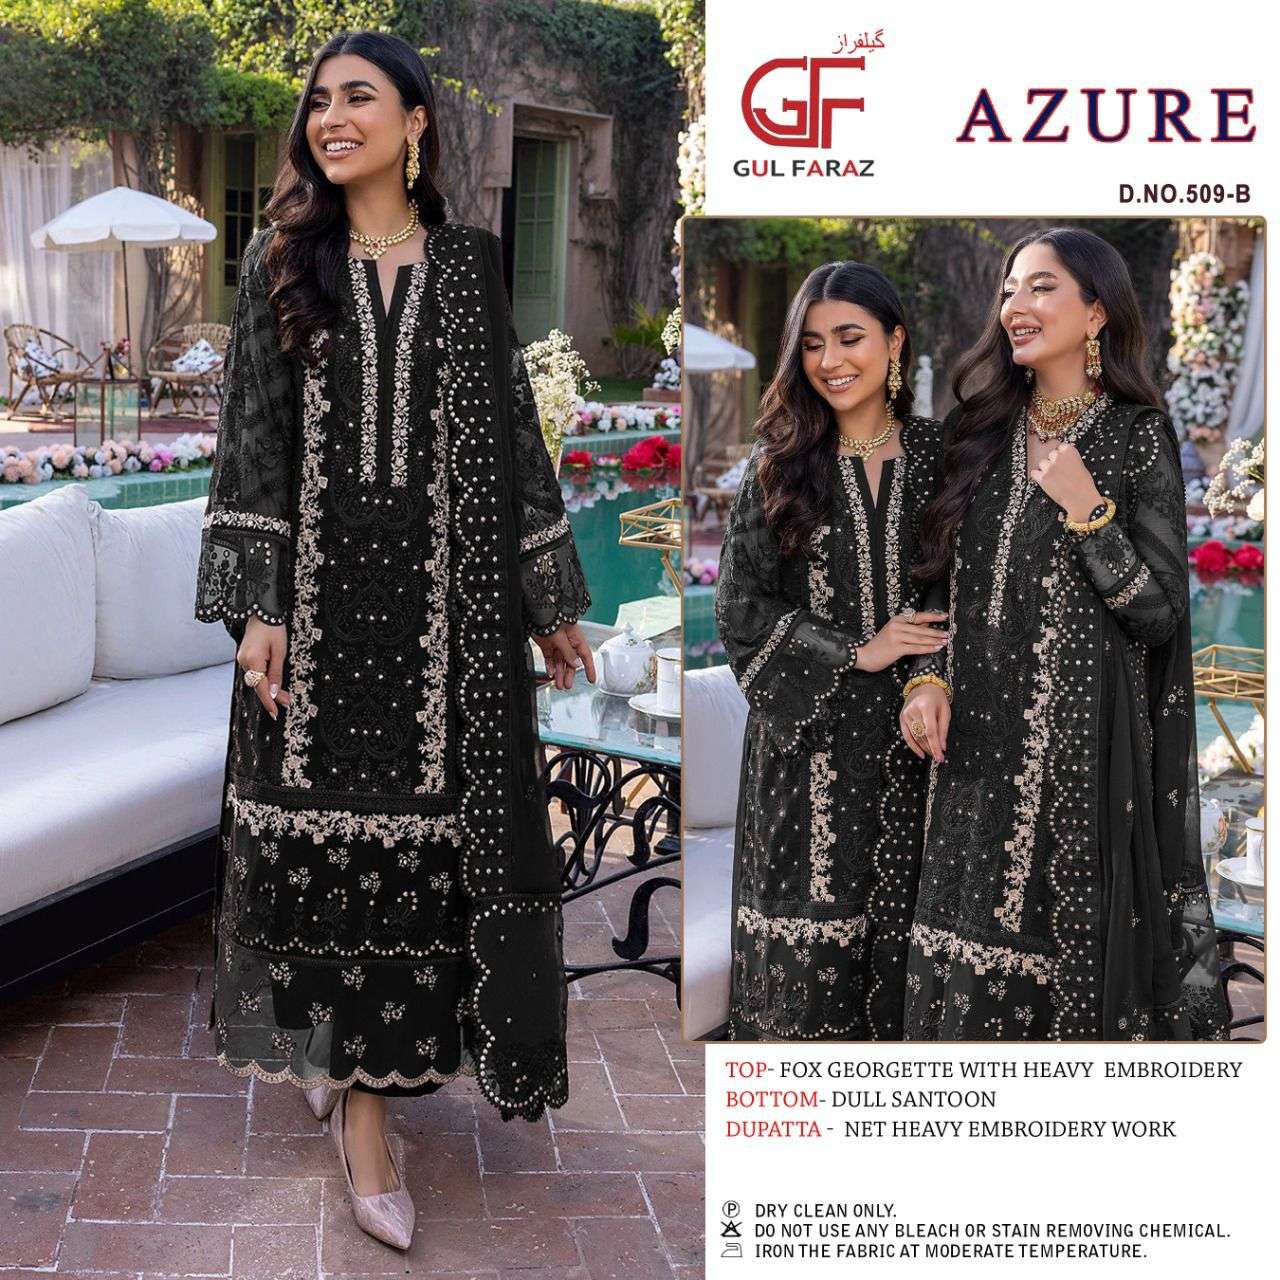 gulfaraz azure 509 colour edition pakistani salwar kameez wholesale price